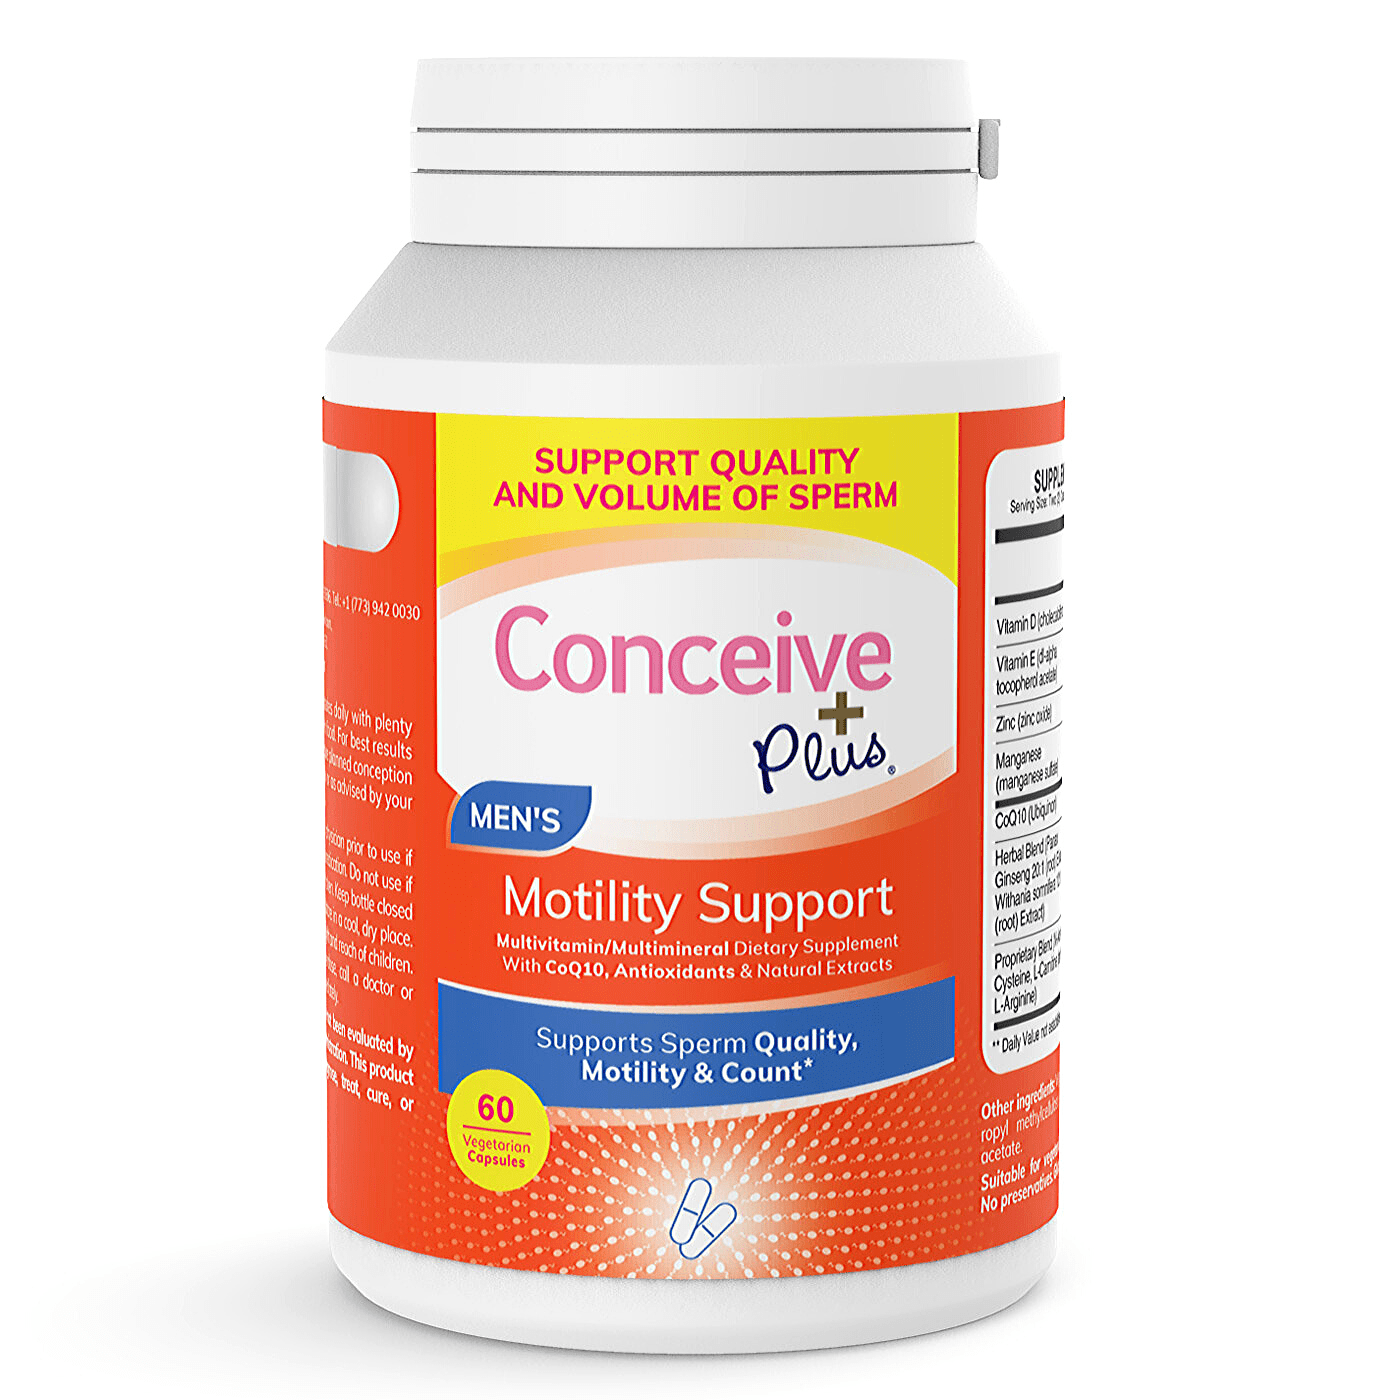 Conceive Plus Male Fertility Supplement for Semen Volumizer, Sperm Count Booster - Zinc, Ginseng, Ashwagandha, Q10, Antioxidants - Motility Boost for Men - 60 Vegetarian Soft Capsules